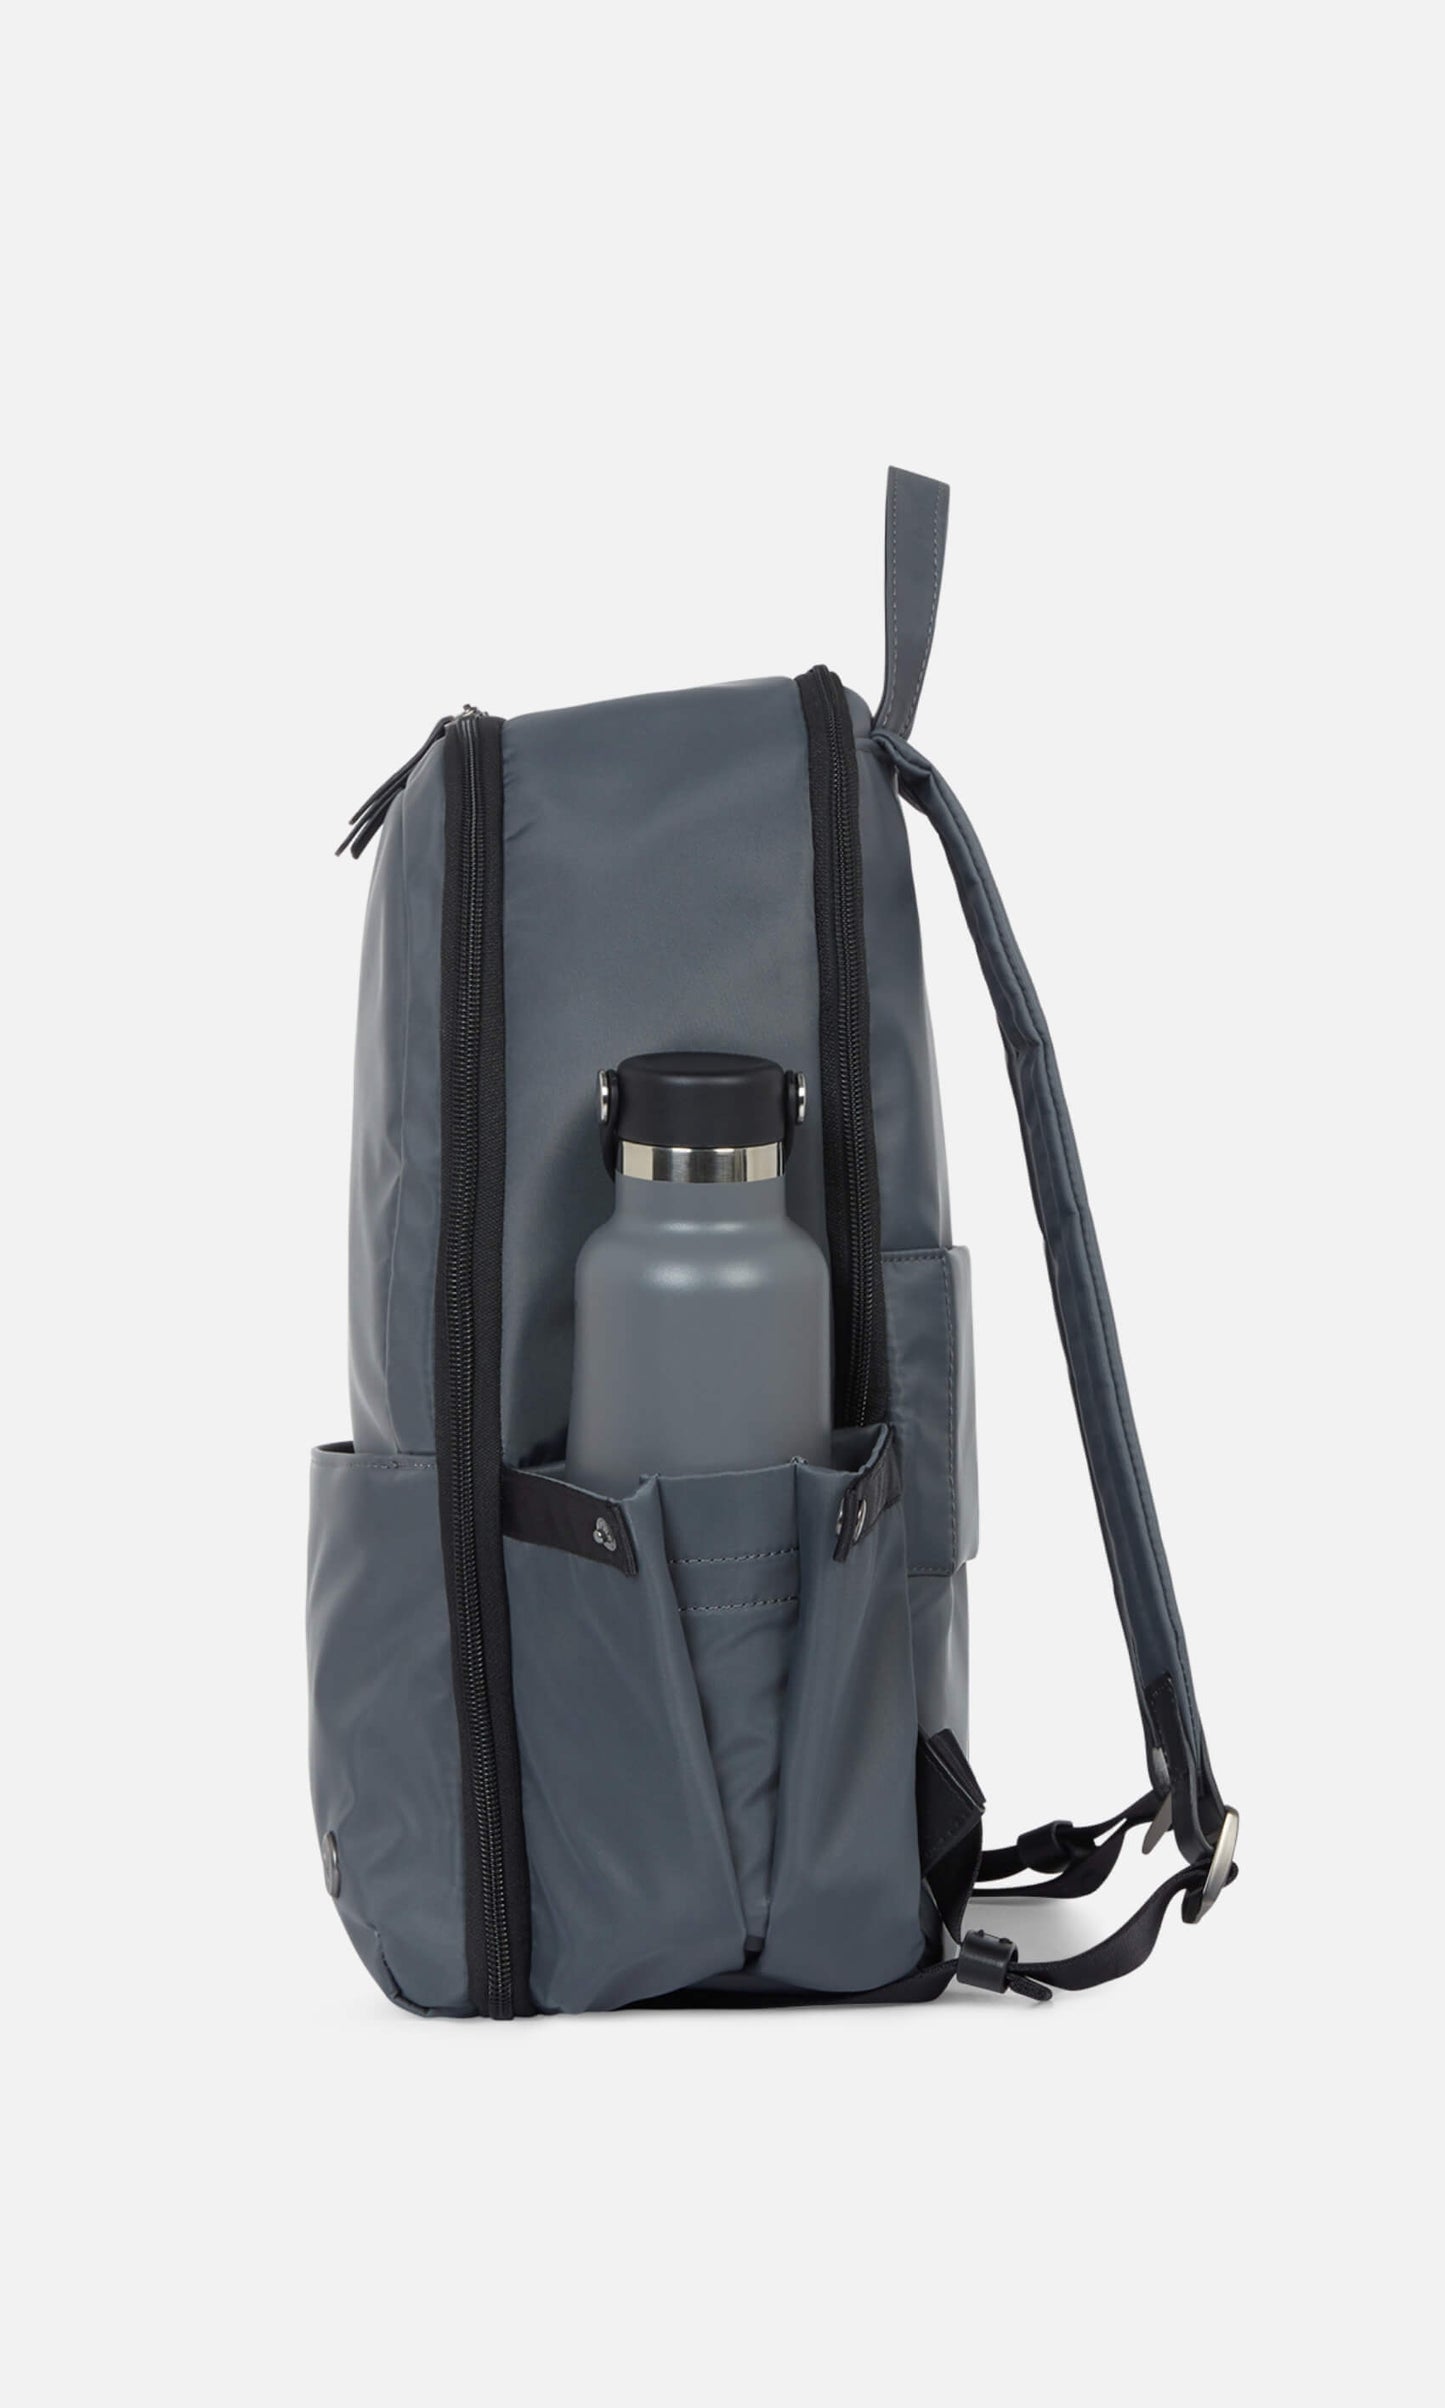 Chelsea backpack in slate